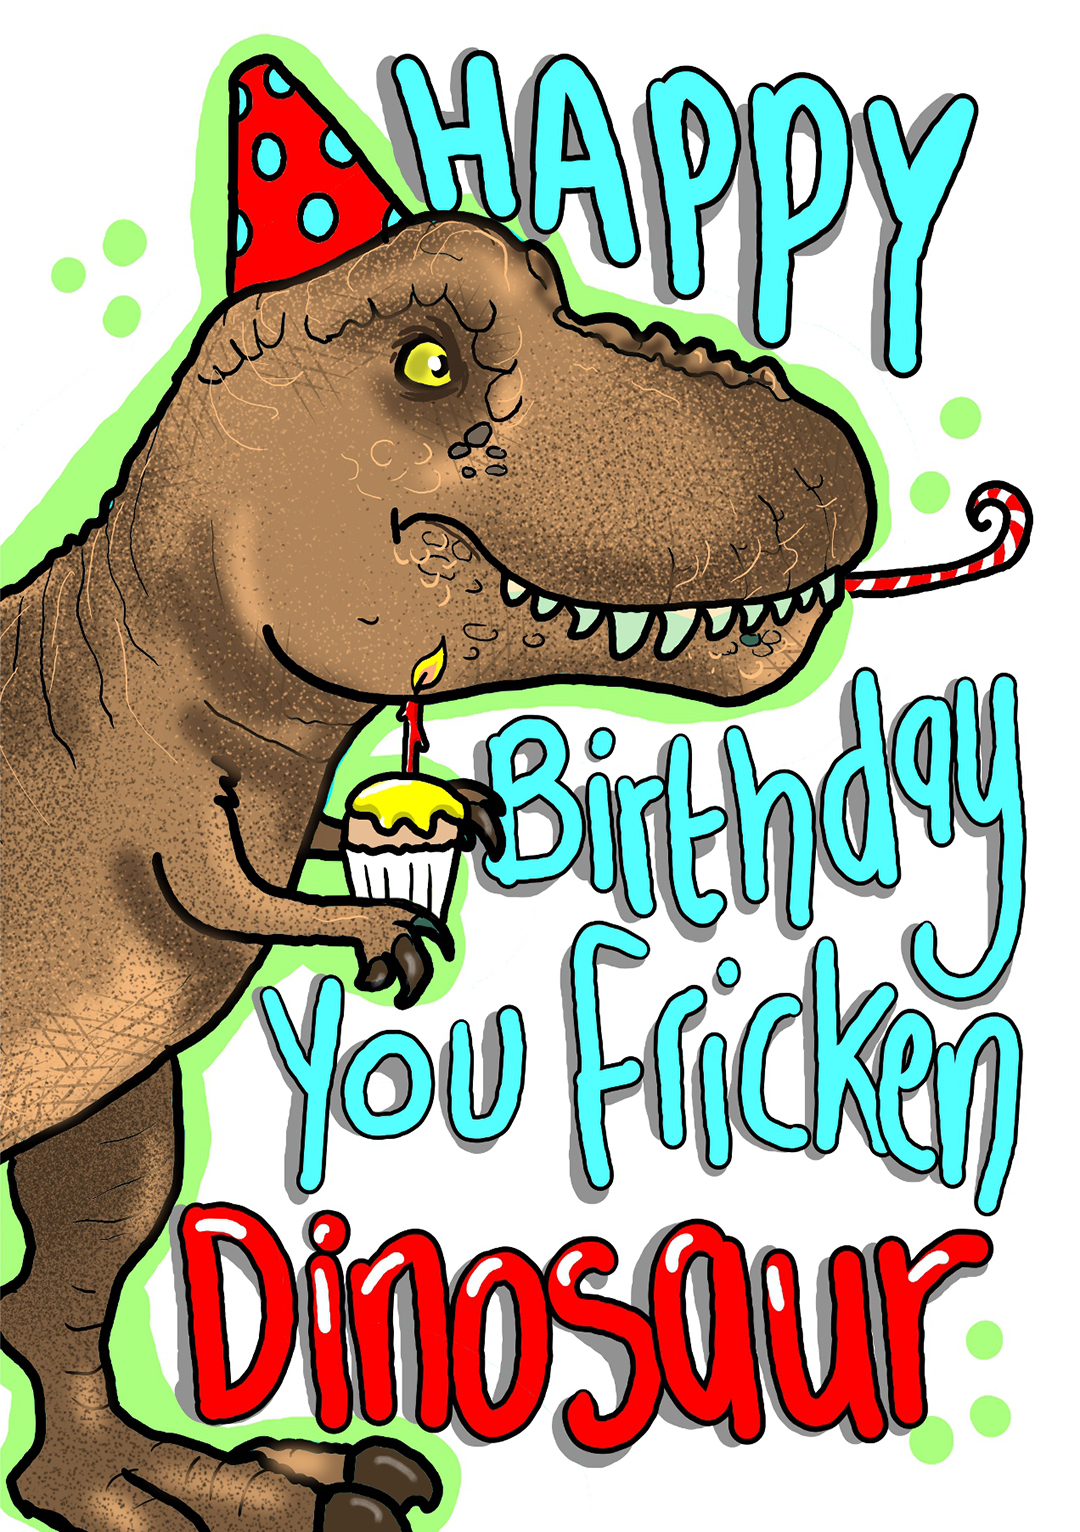 Happy Birthday You Fricken Dinosaur